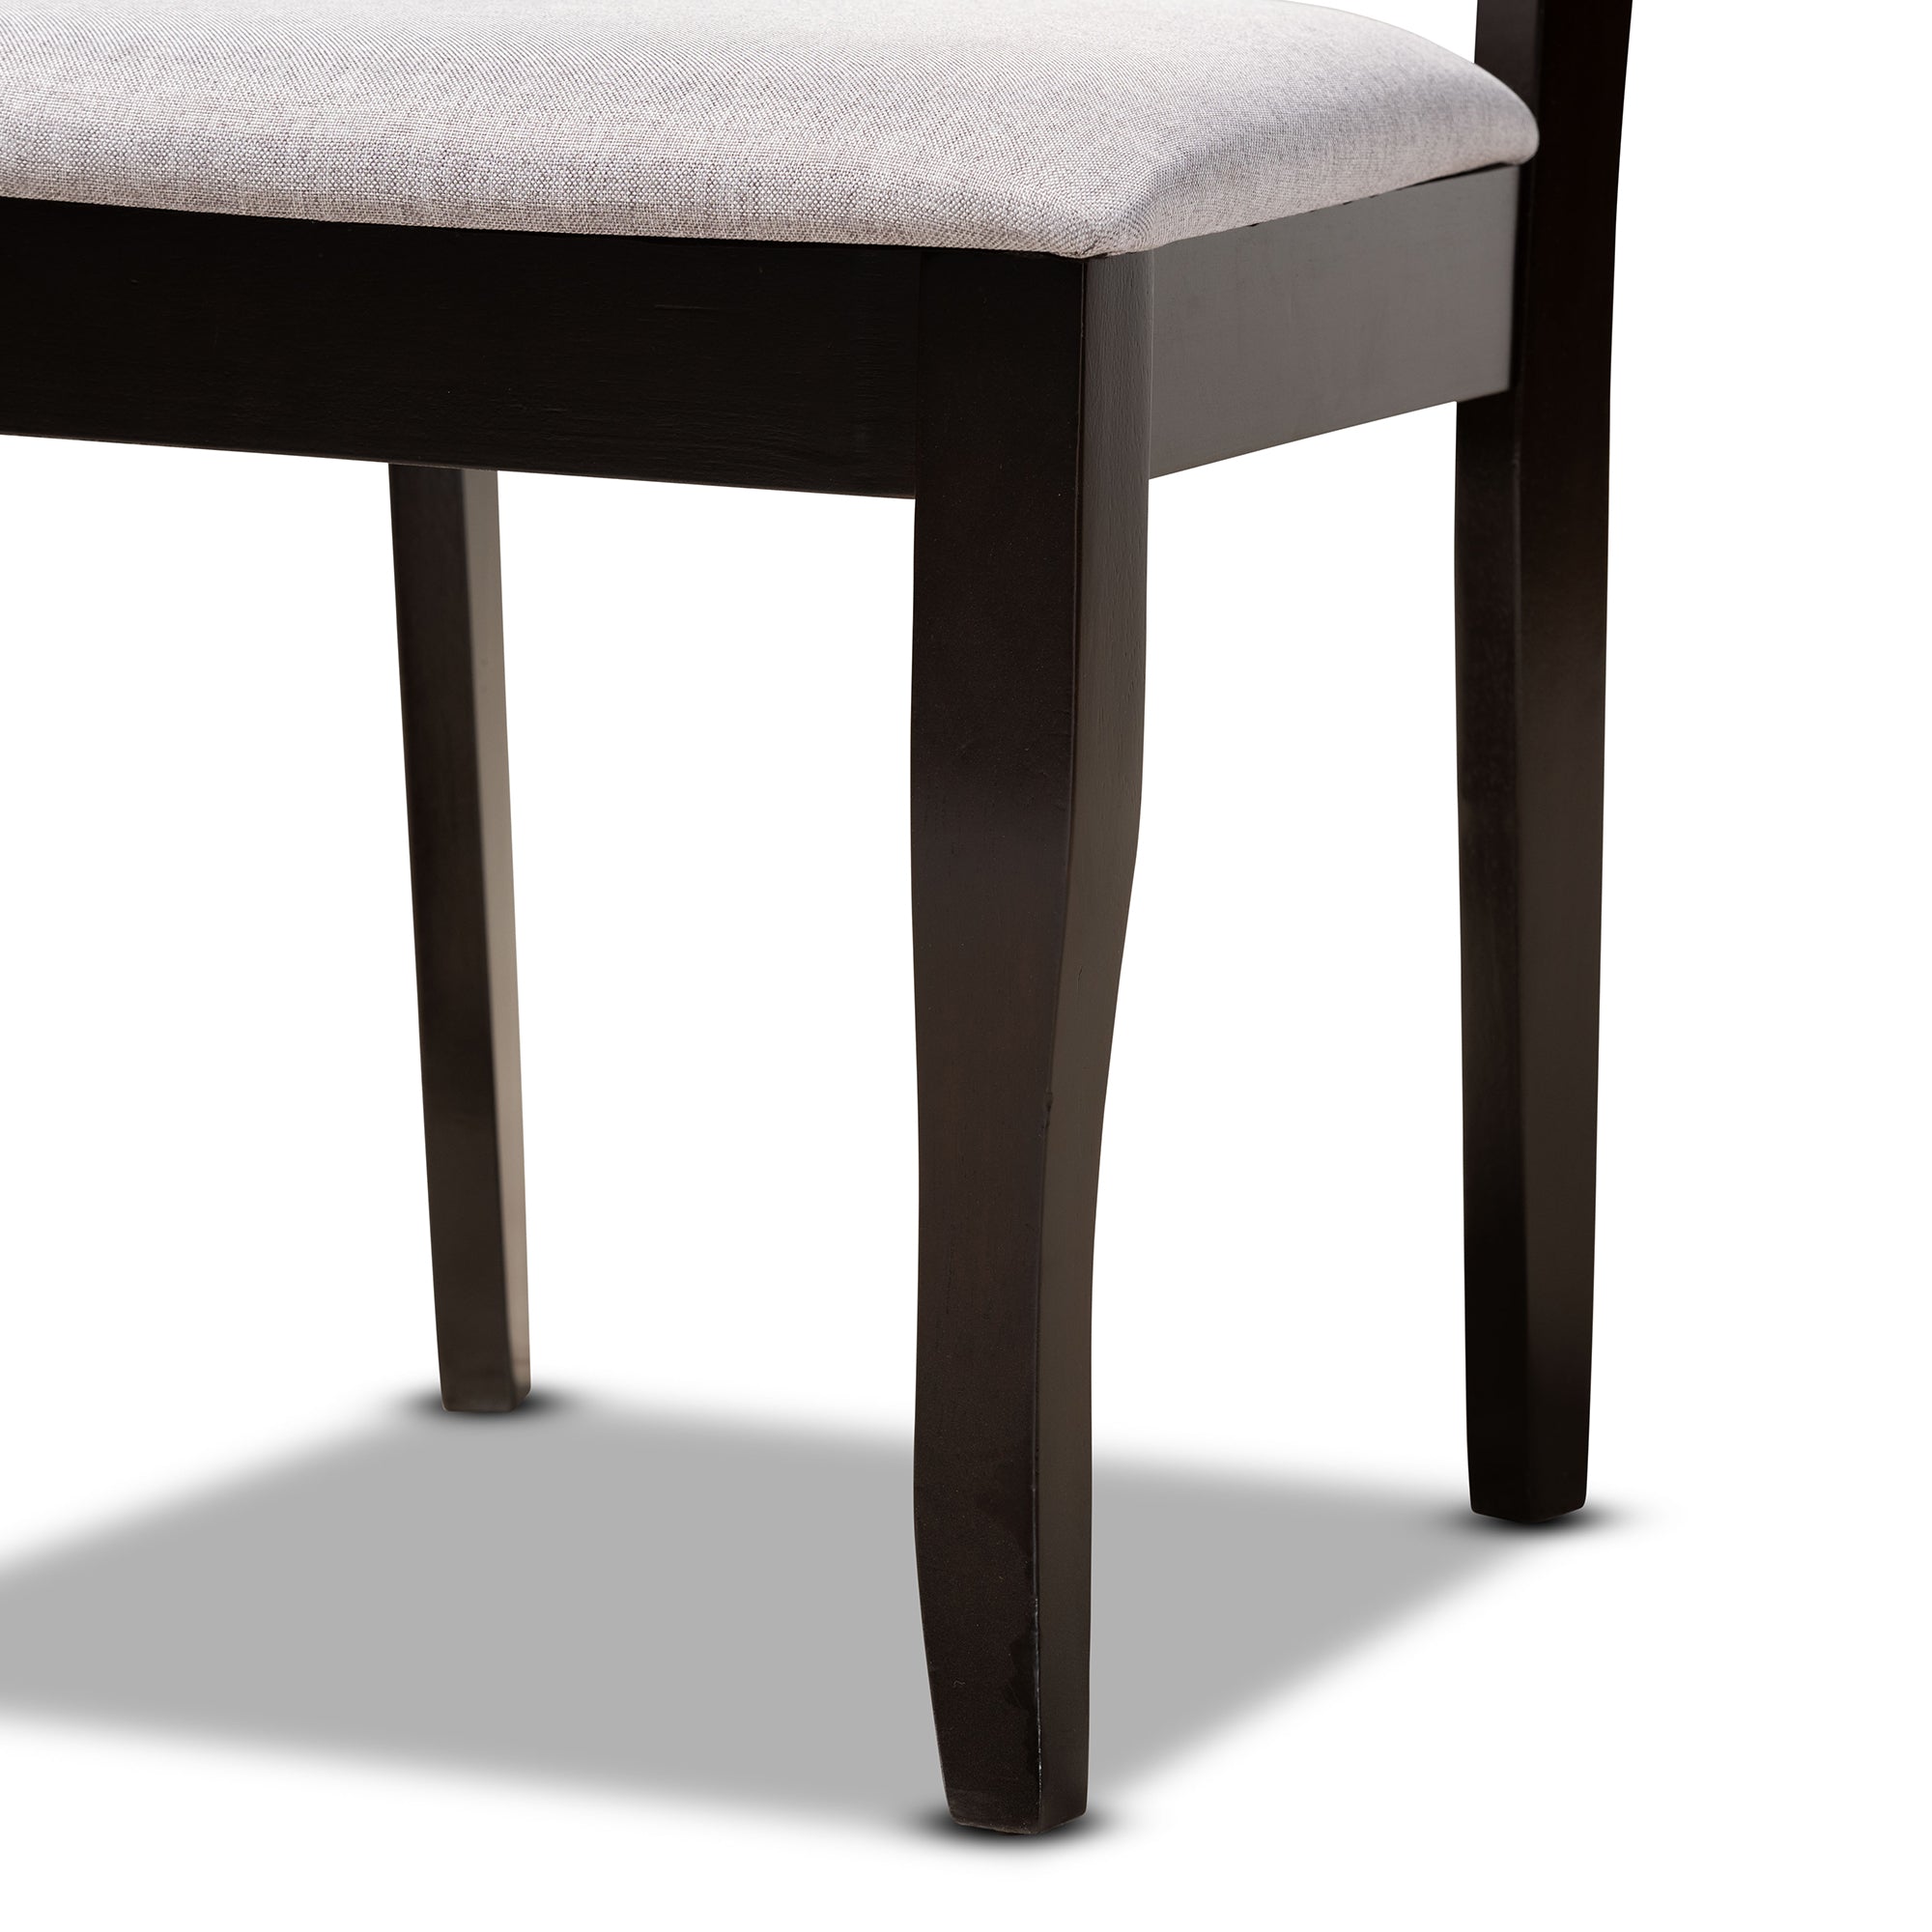 Jana Modern Dining Table & Dining Chairs 5-Piece-Dining Set-Baxton Studio - WI-Wall2Wall Furnishings